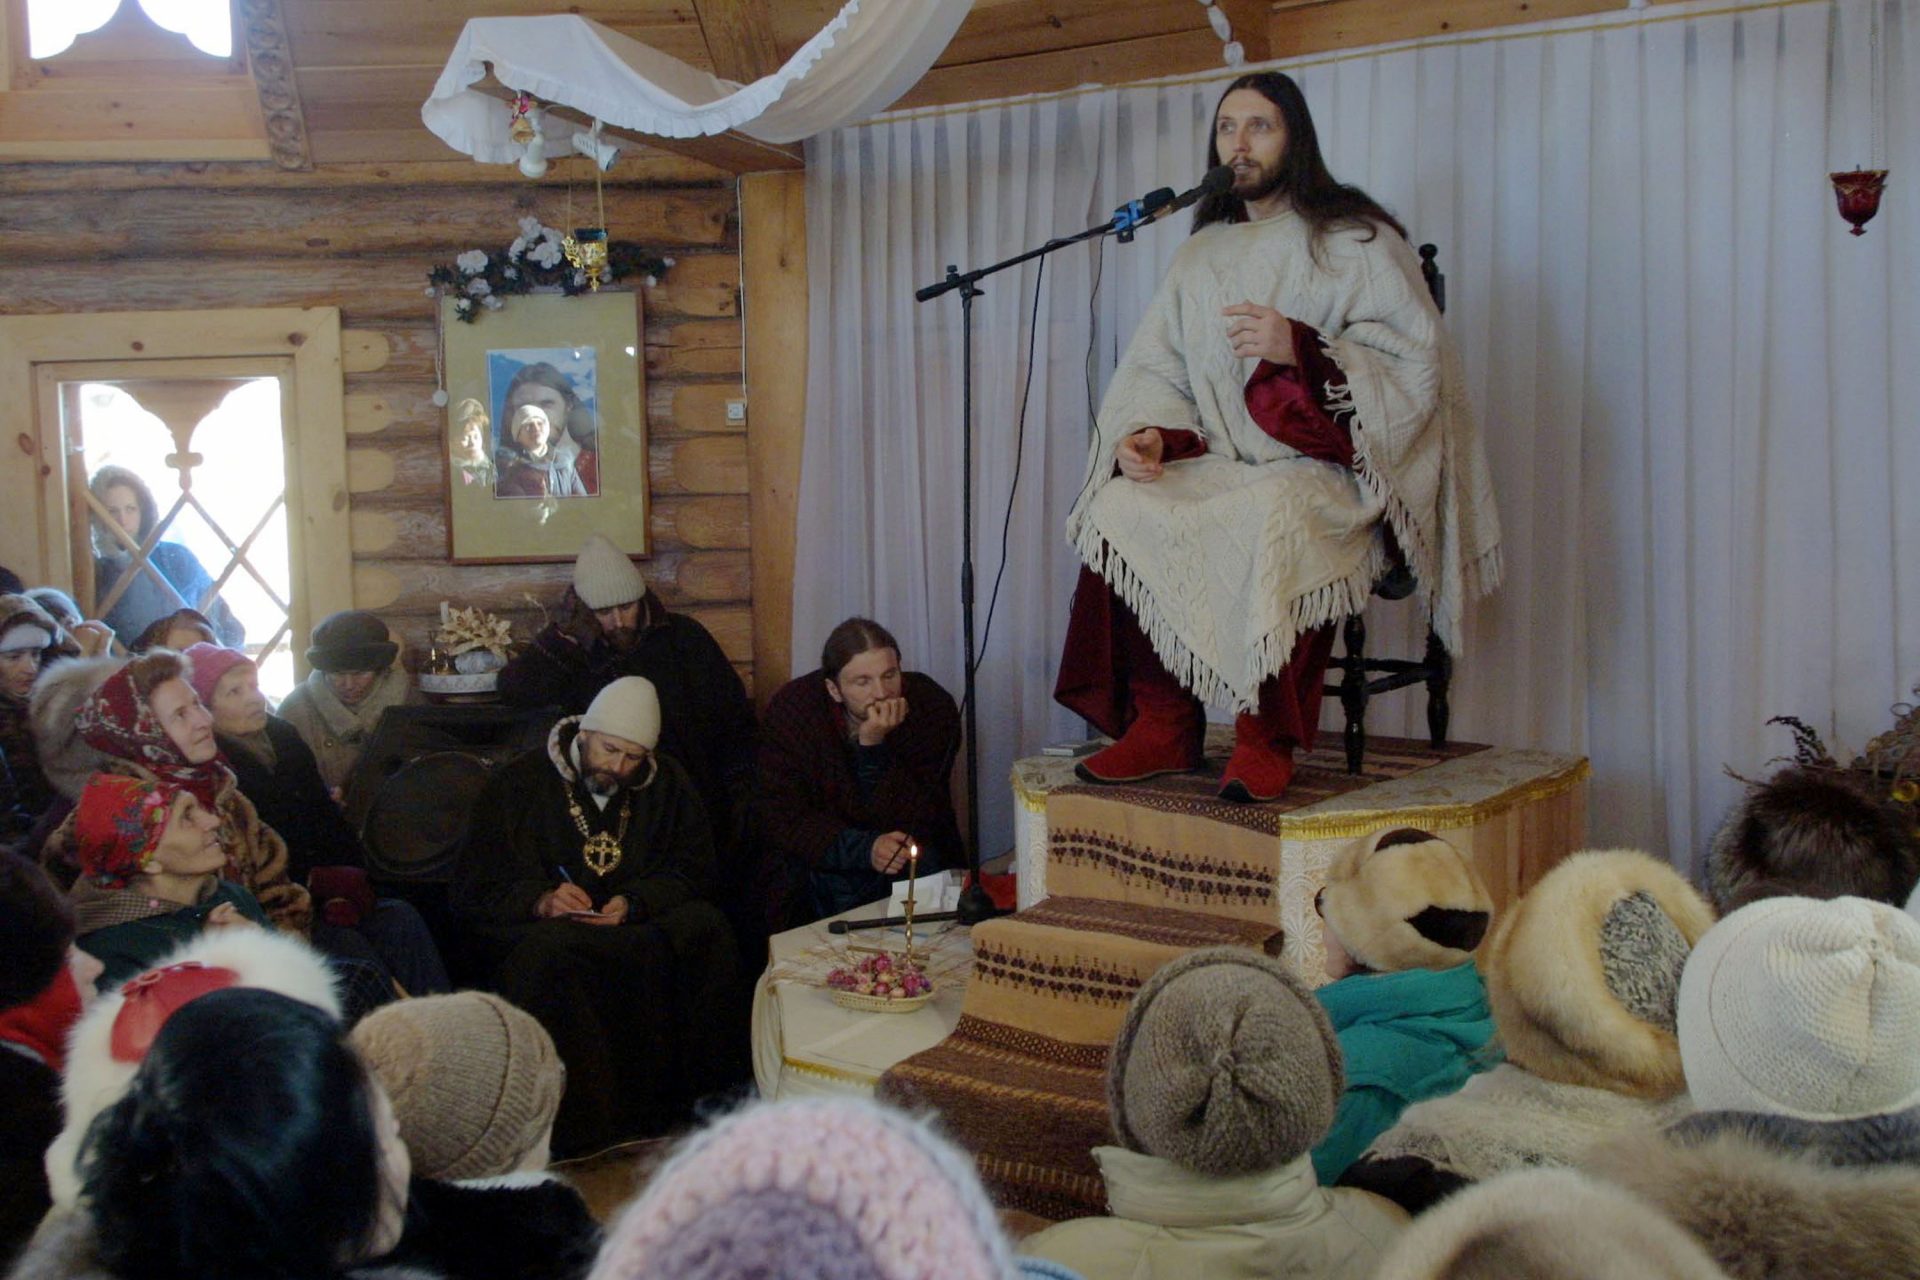 Is Jesus in jail in Russia?